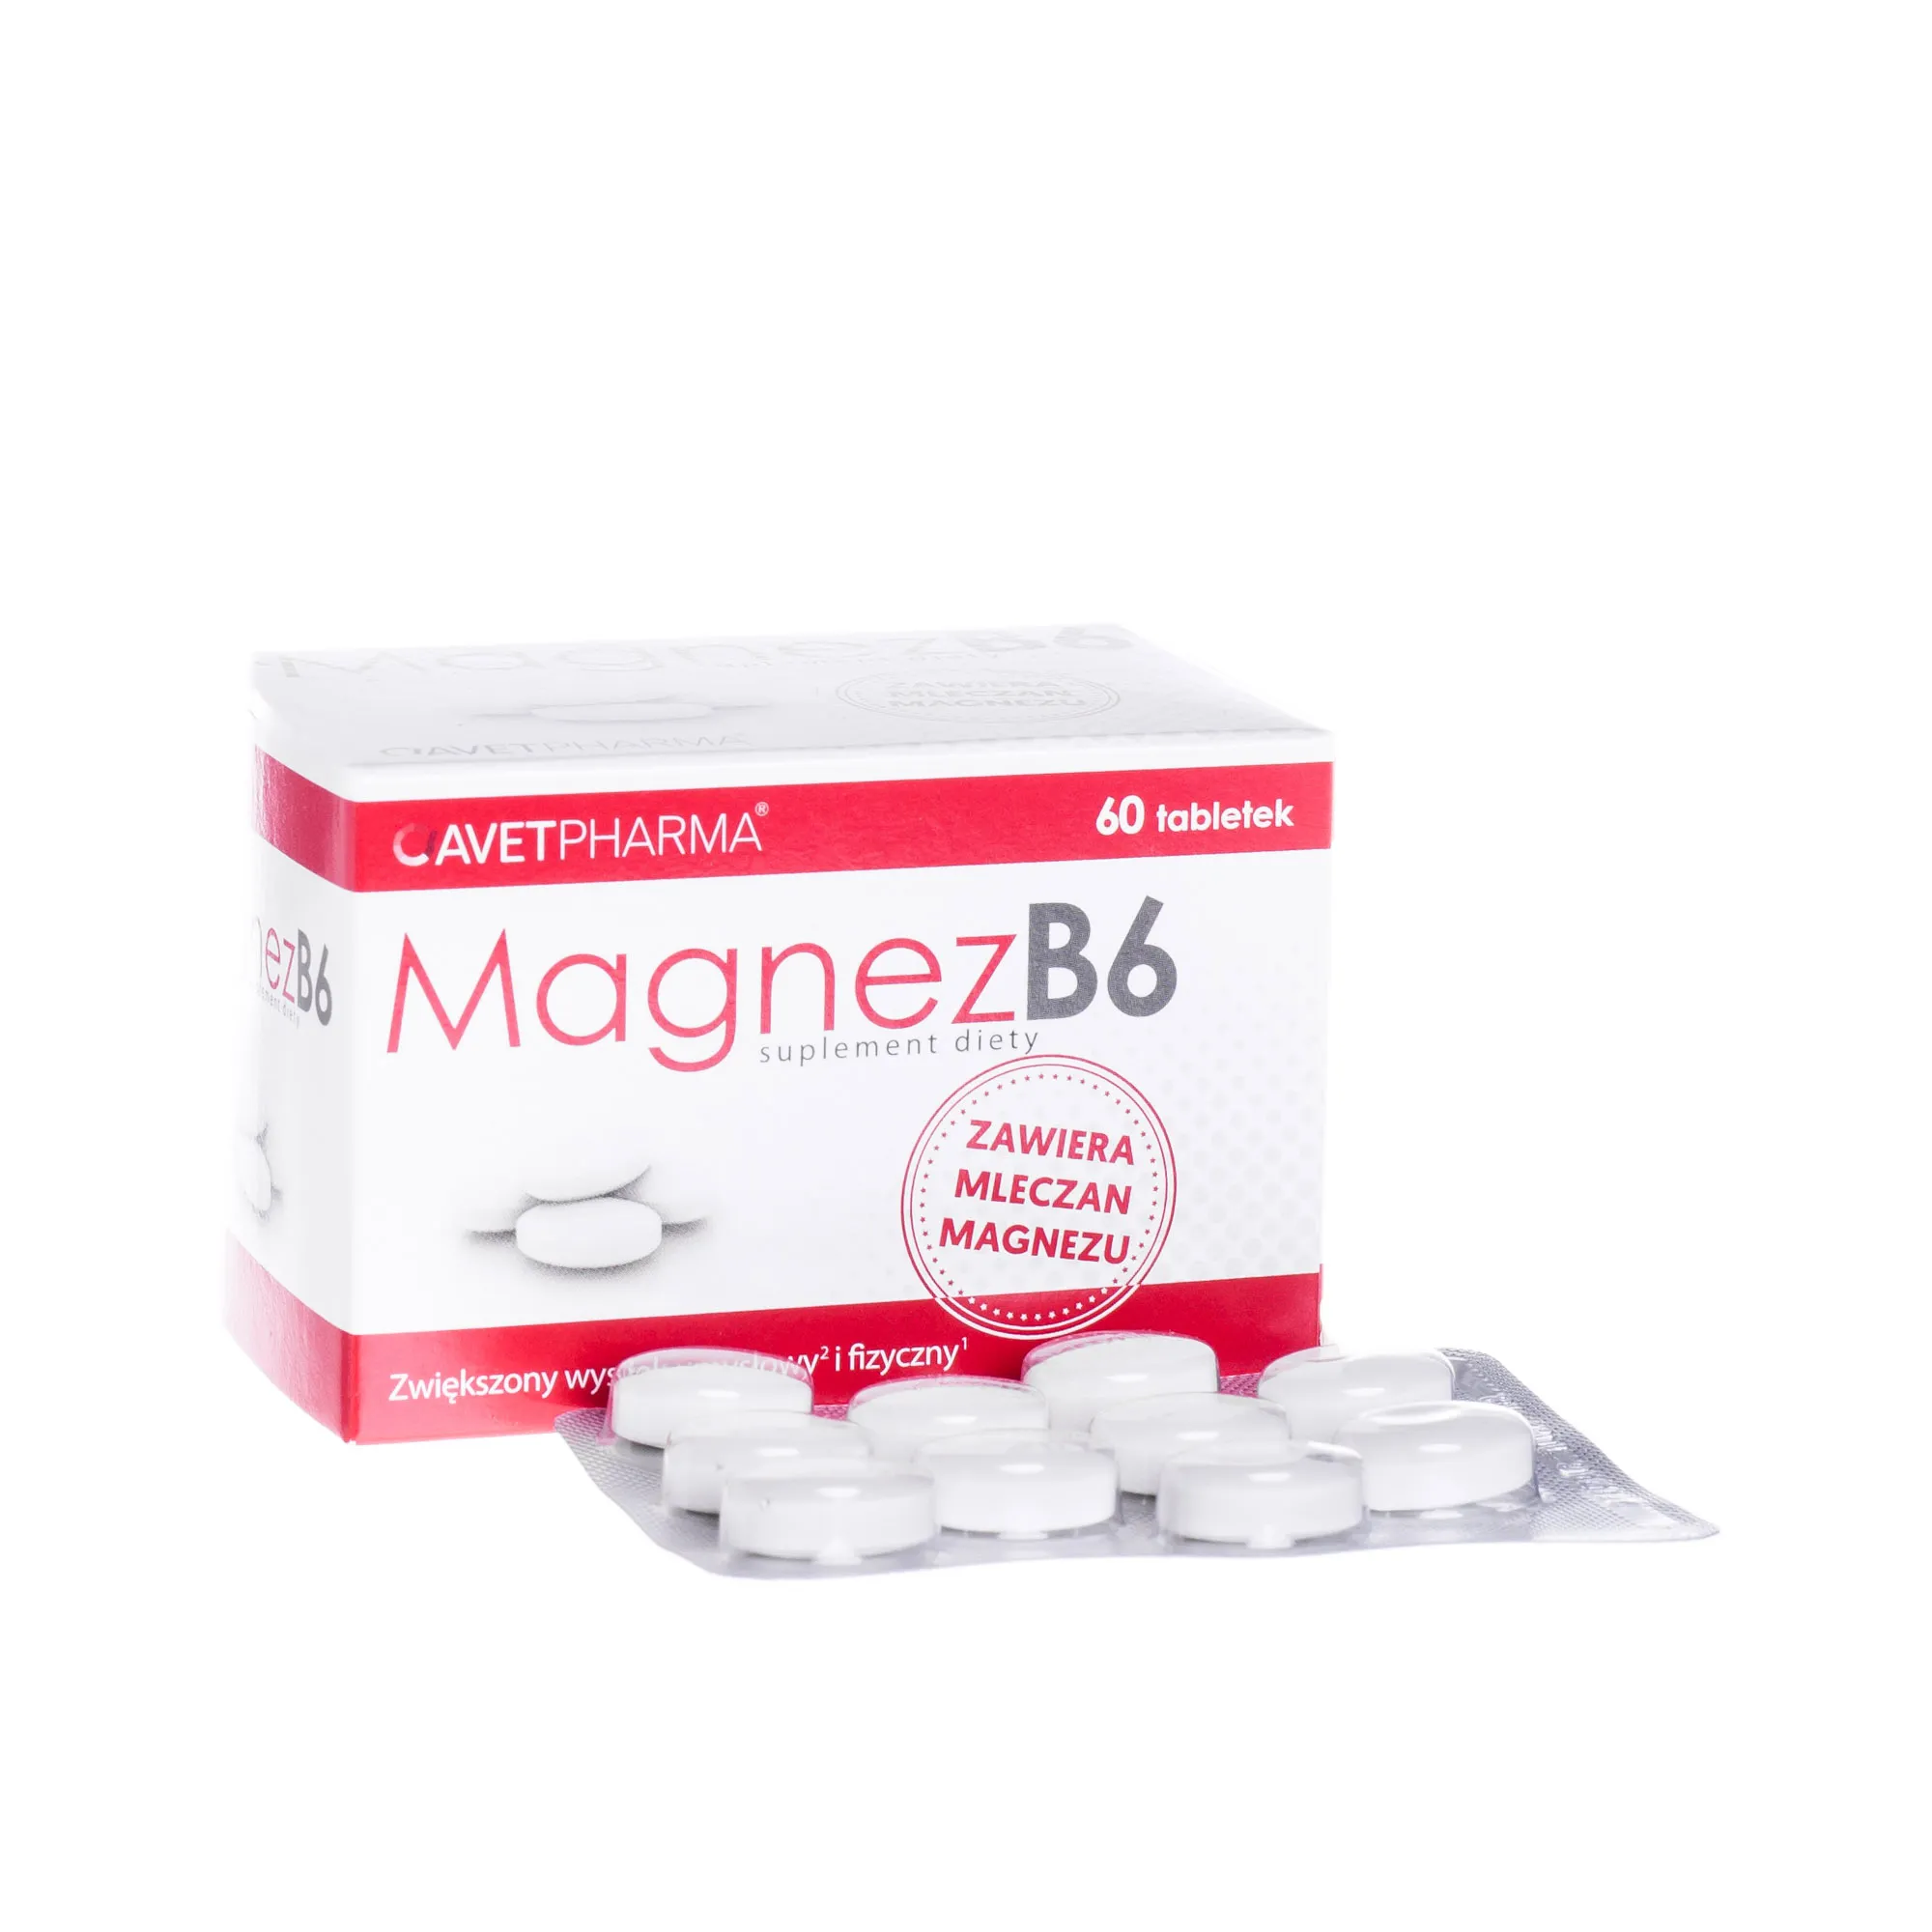 Magnez B6, 60 tabletek